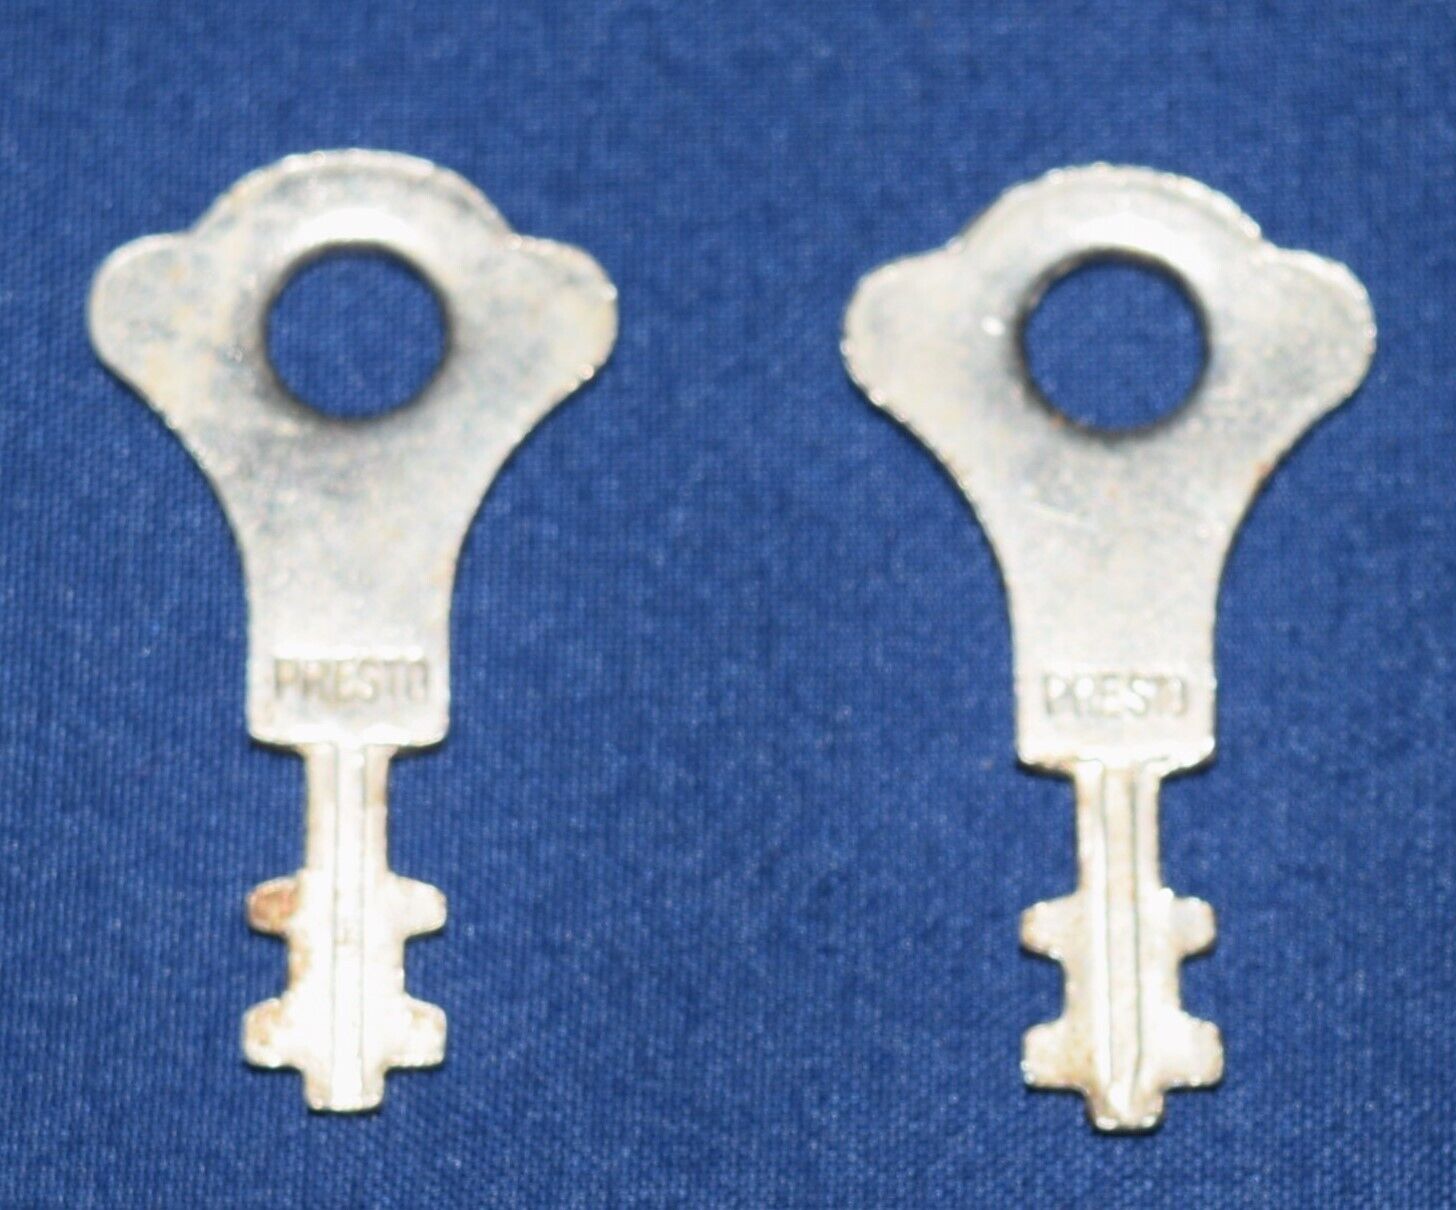 2 Small Matching Vintage Presto Luggage Keys Trunk Carrying Case Keys